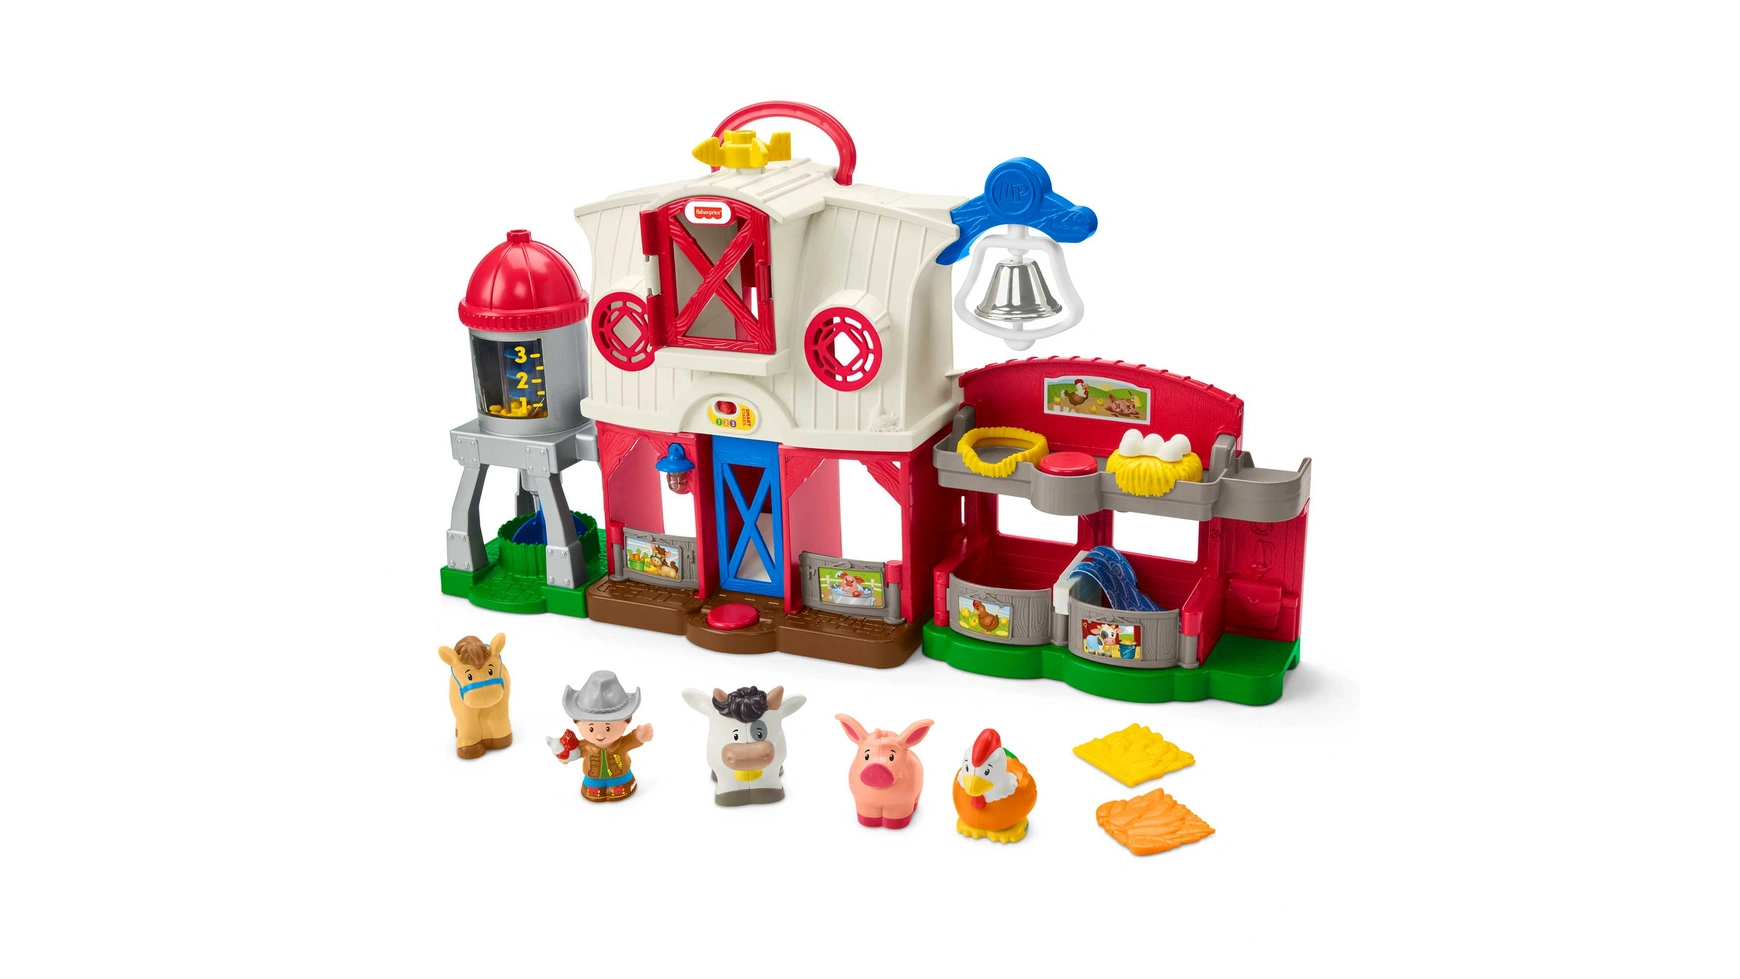 цена Ферма Fisher Price Little People, включая фигурки и игрушки для малышей